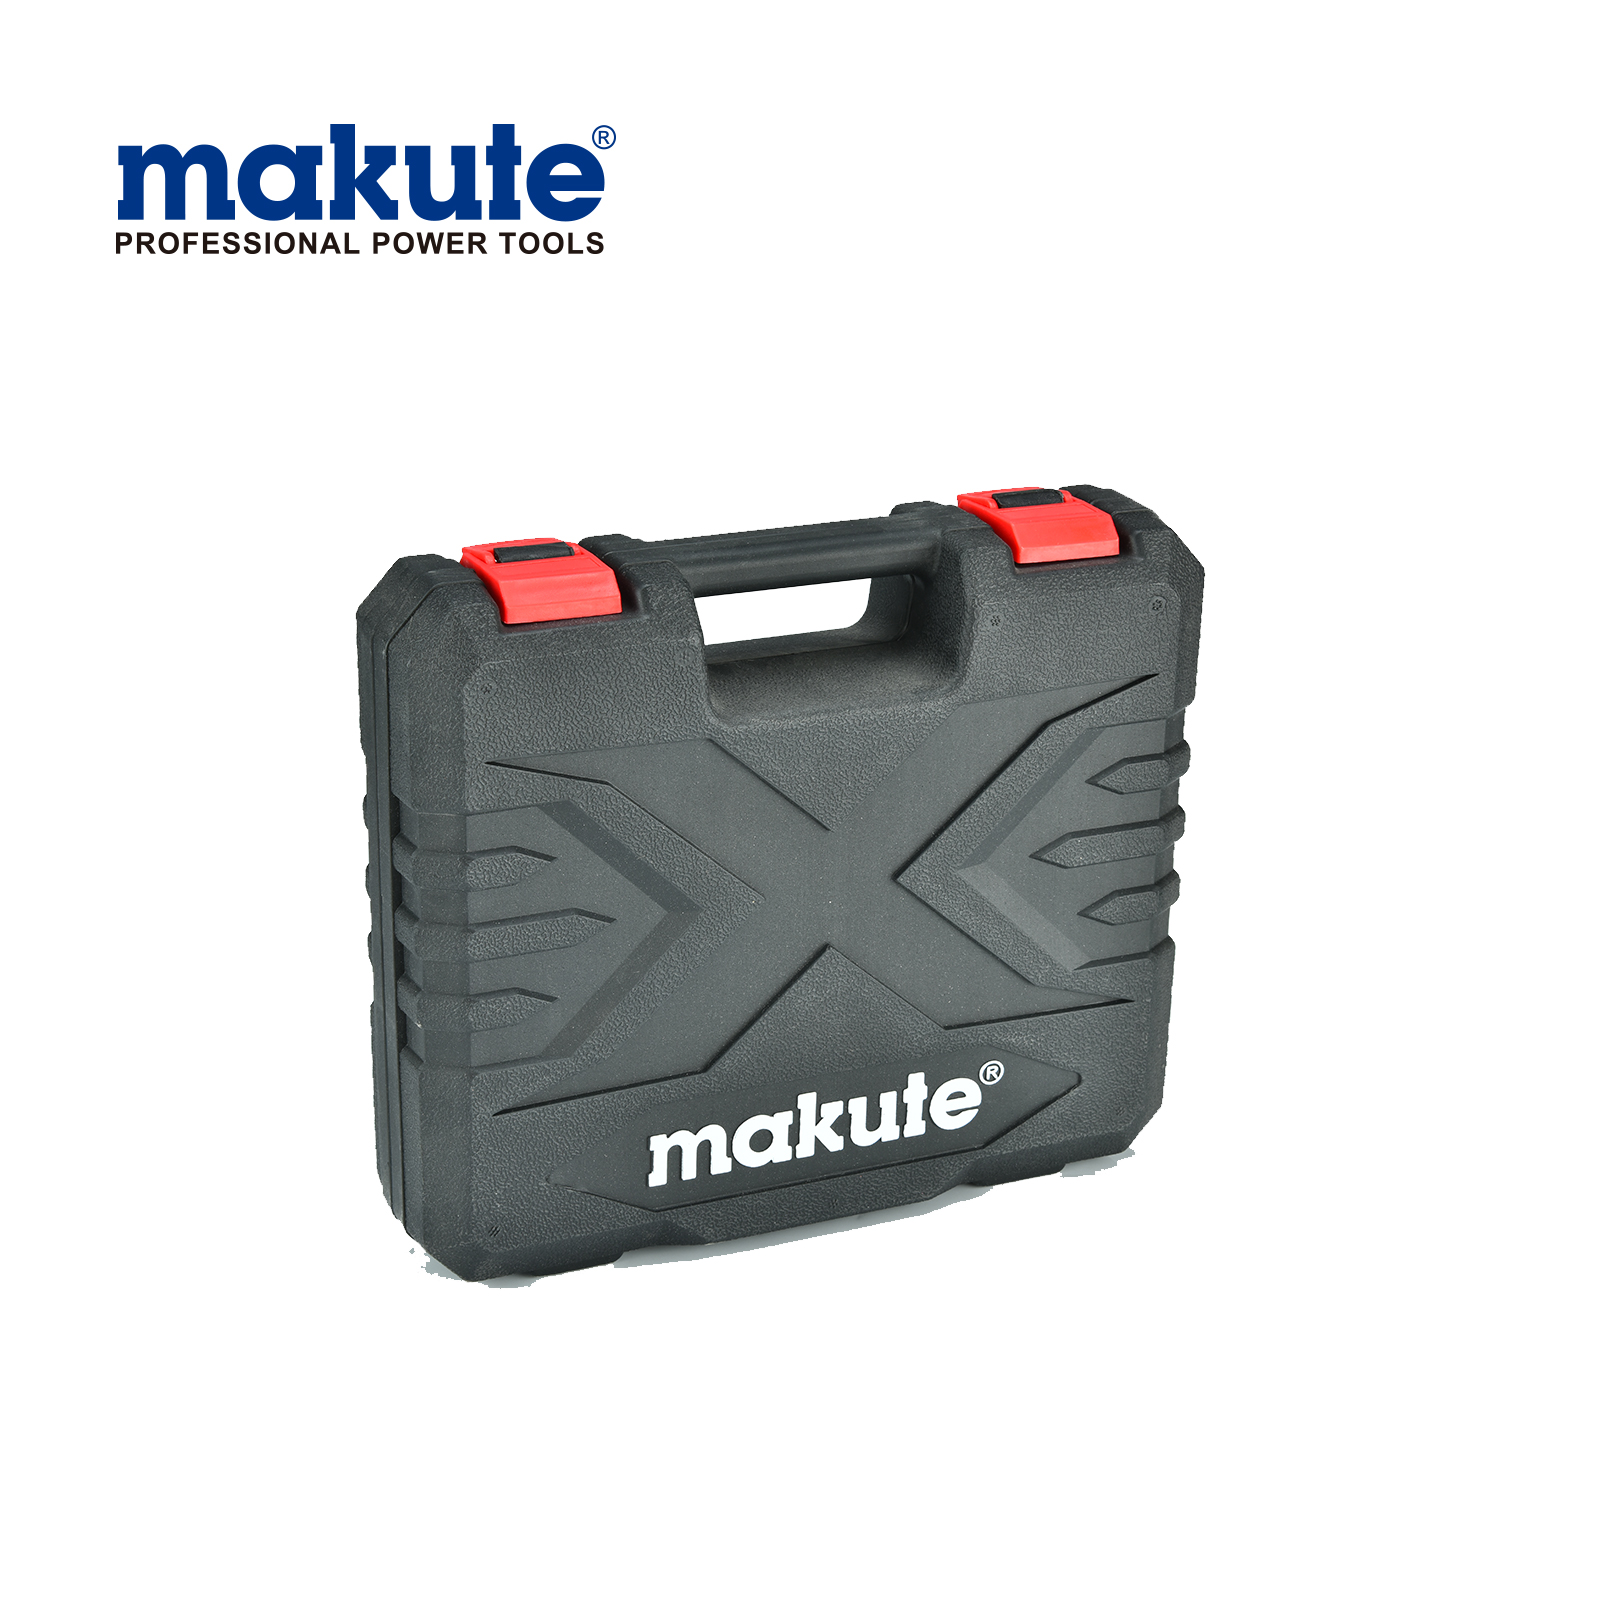 Makute Cordless Drill CD026